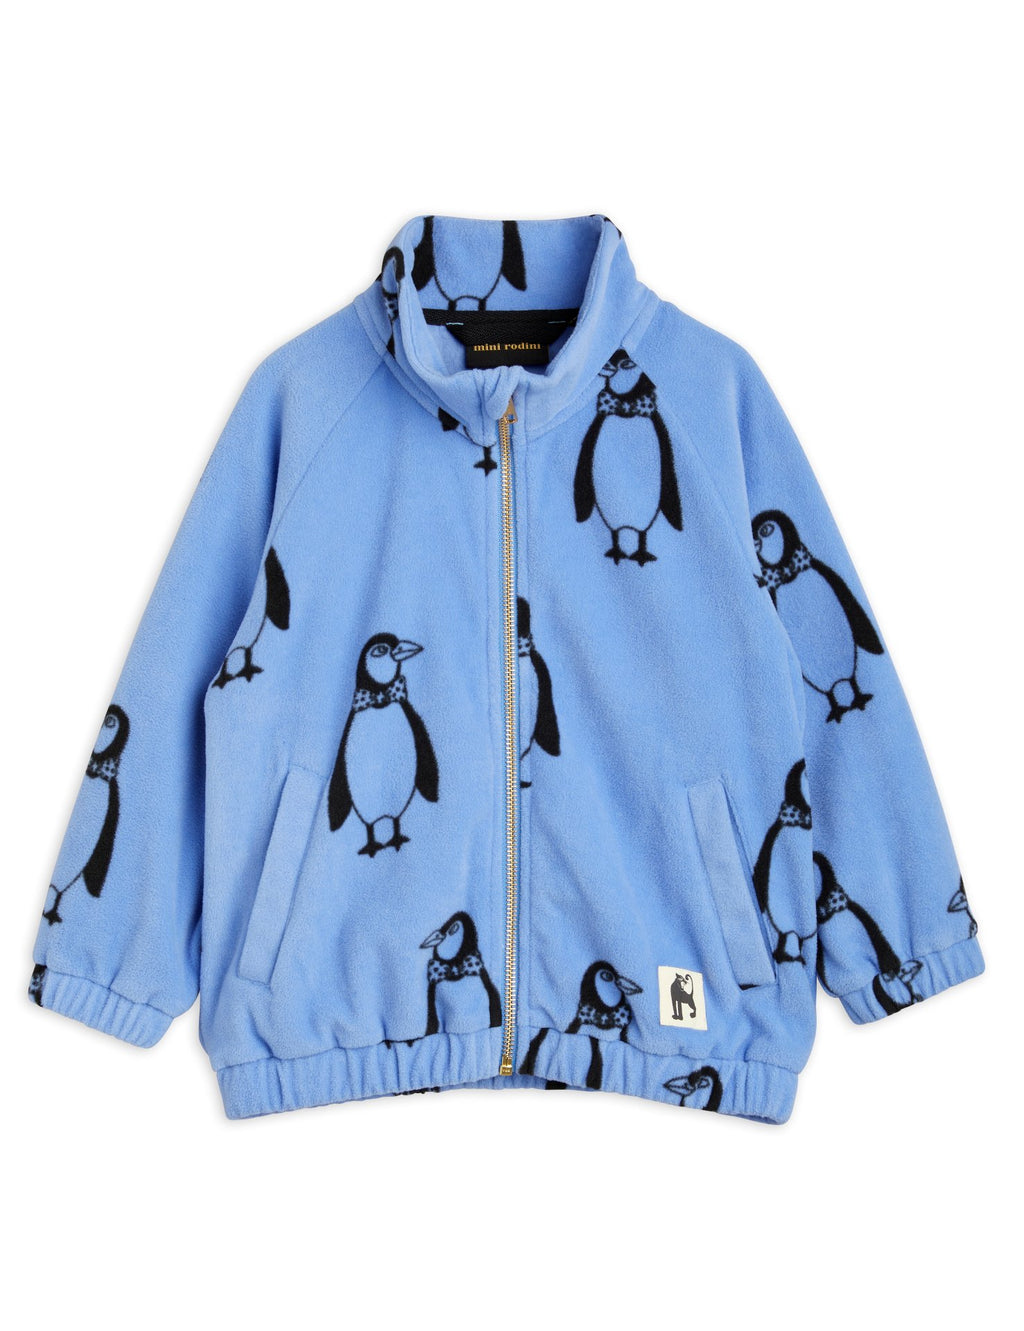 MINI RODINI / Penguin Fleece Jacket